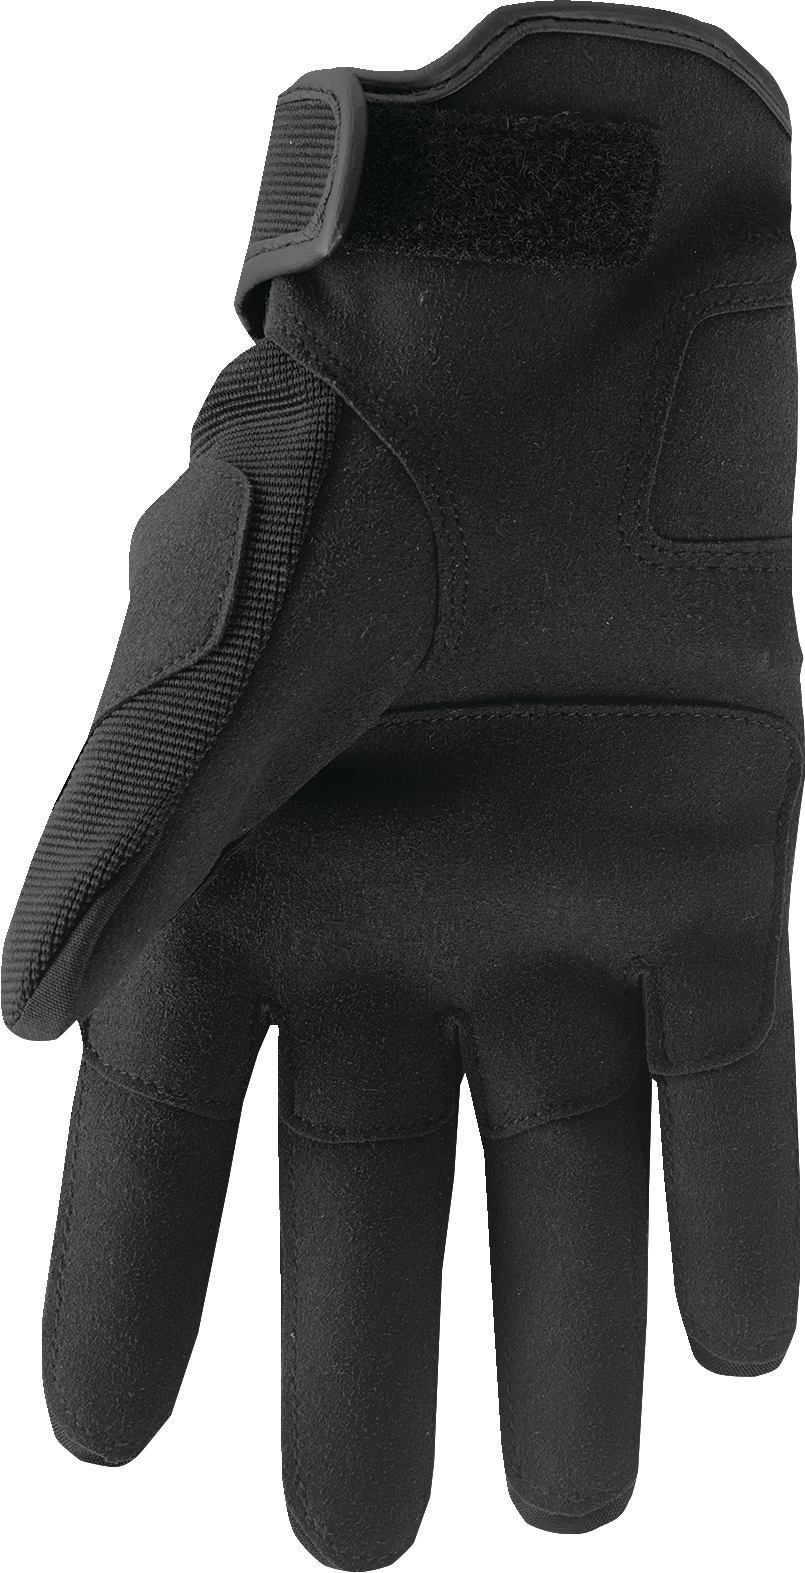 THOR Range Gloves - Black - Medium 3330-7610